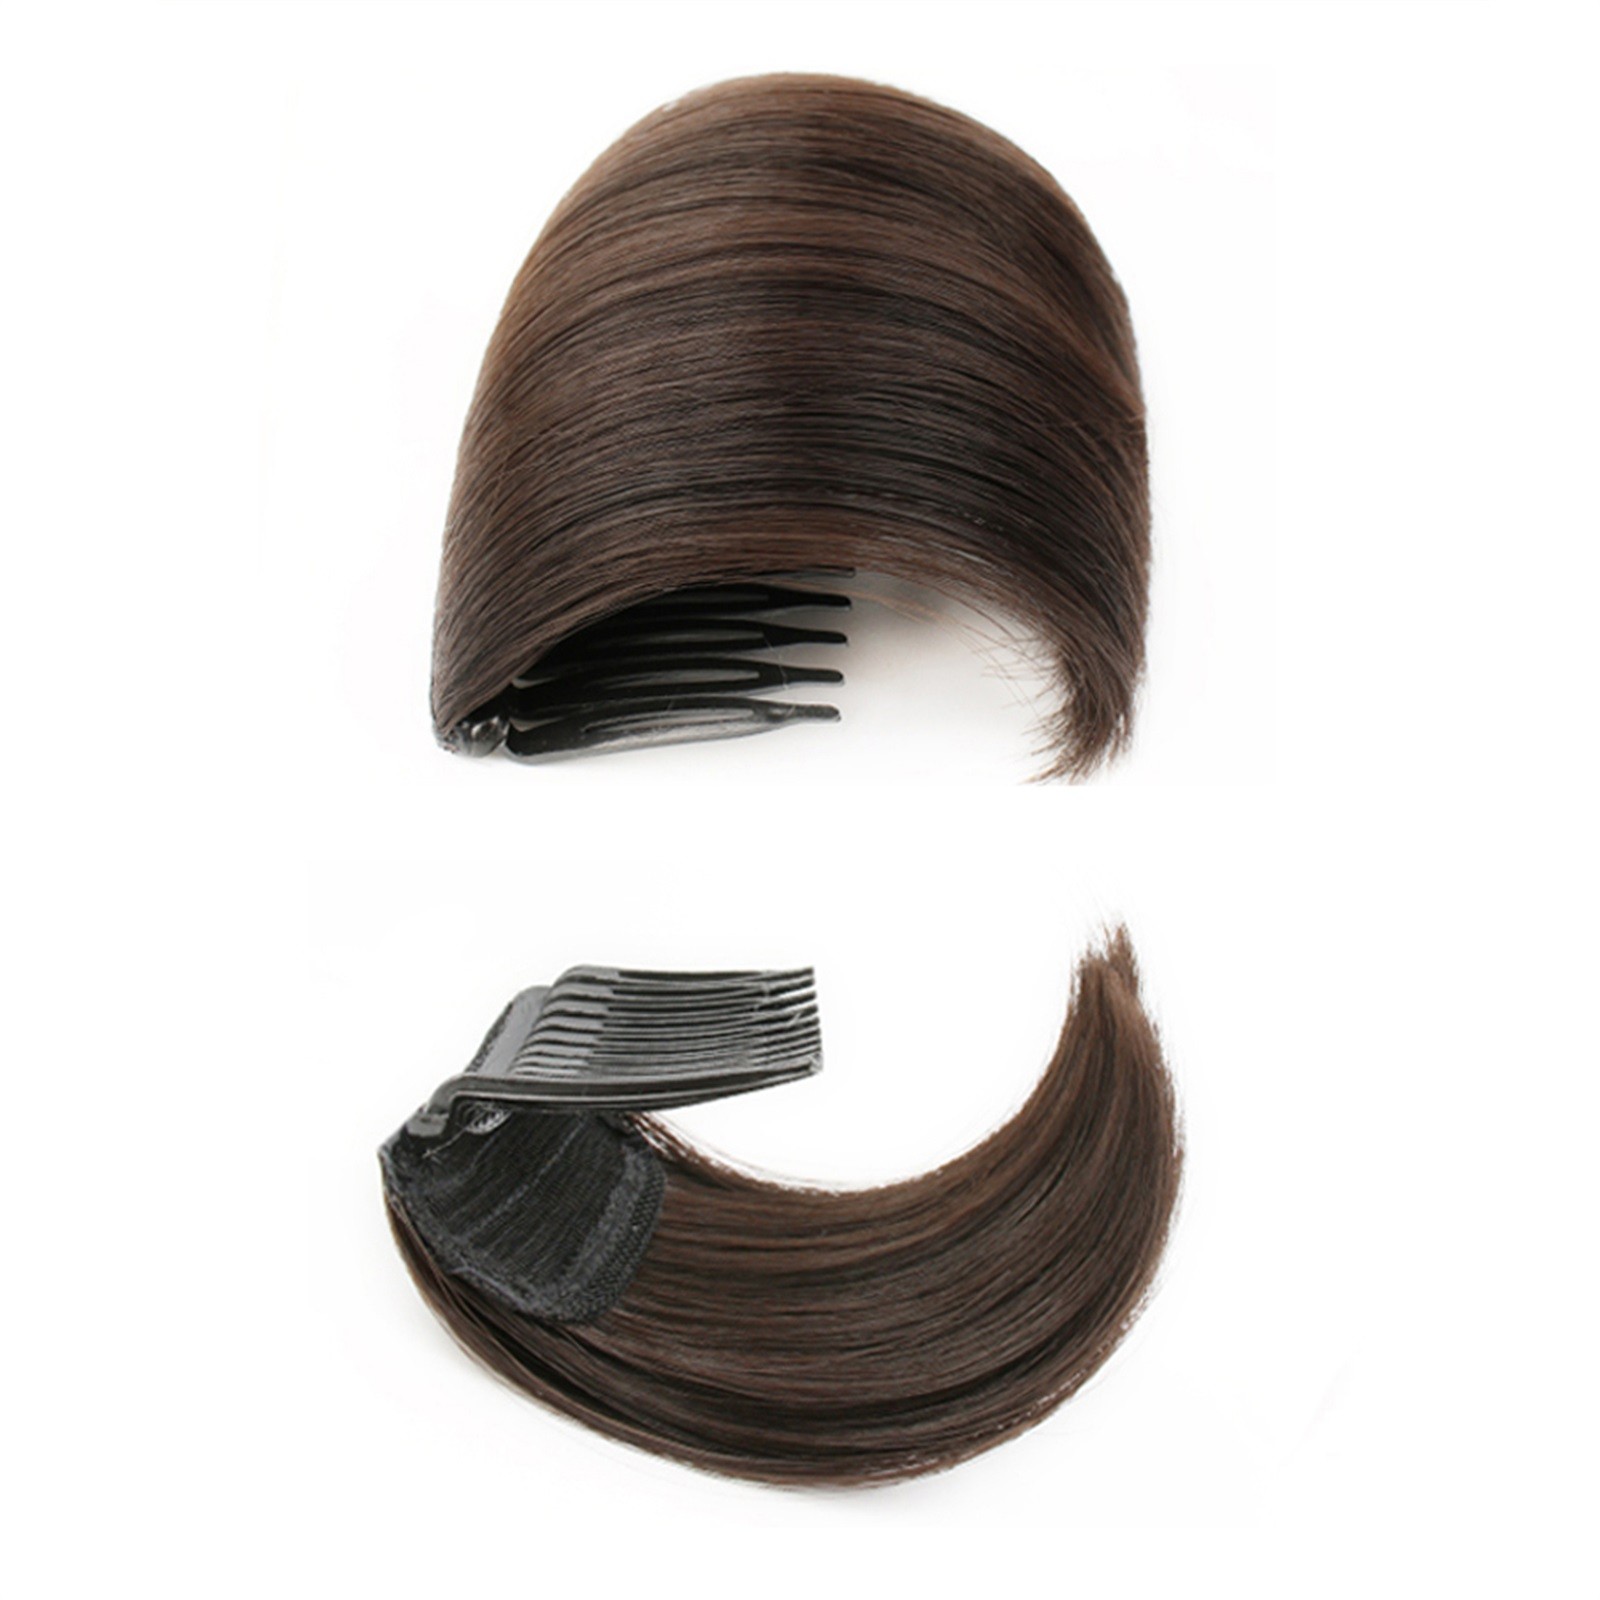 HSMQHJWE Hair Clip for Thick Hair Women Hair Puff Increase Female Pad Comb Comb Hair Hair Simulated Powder Hair Top Pad Wig Hair Pad Increase Lazy Baby Hair Accessories Clip - image 2 of 5